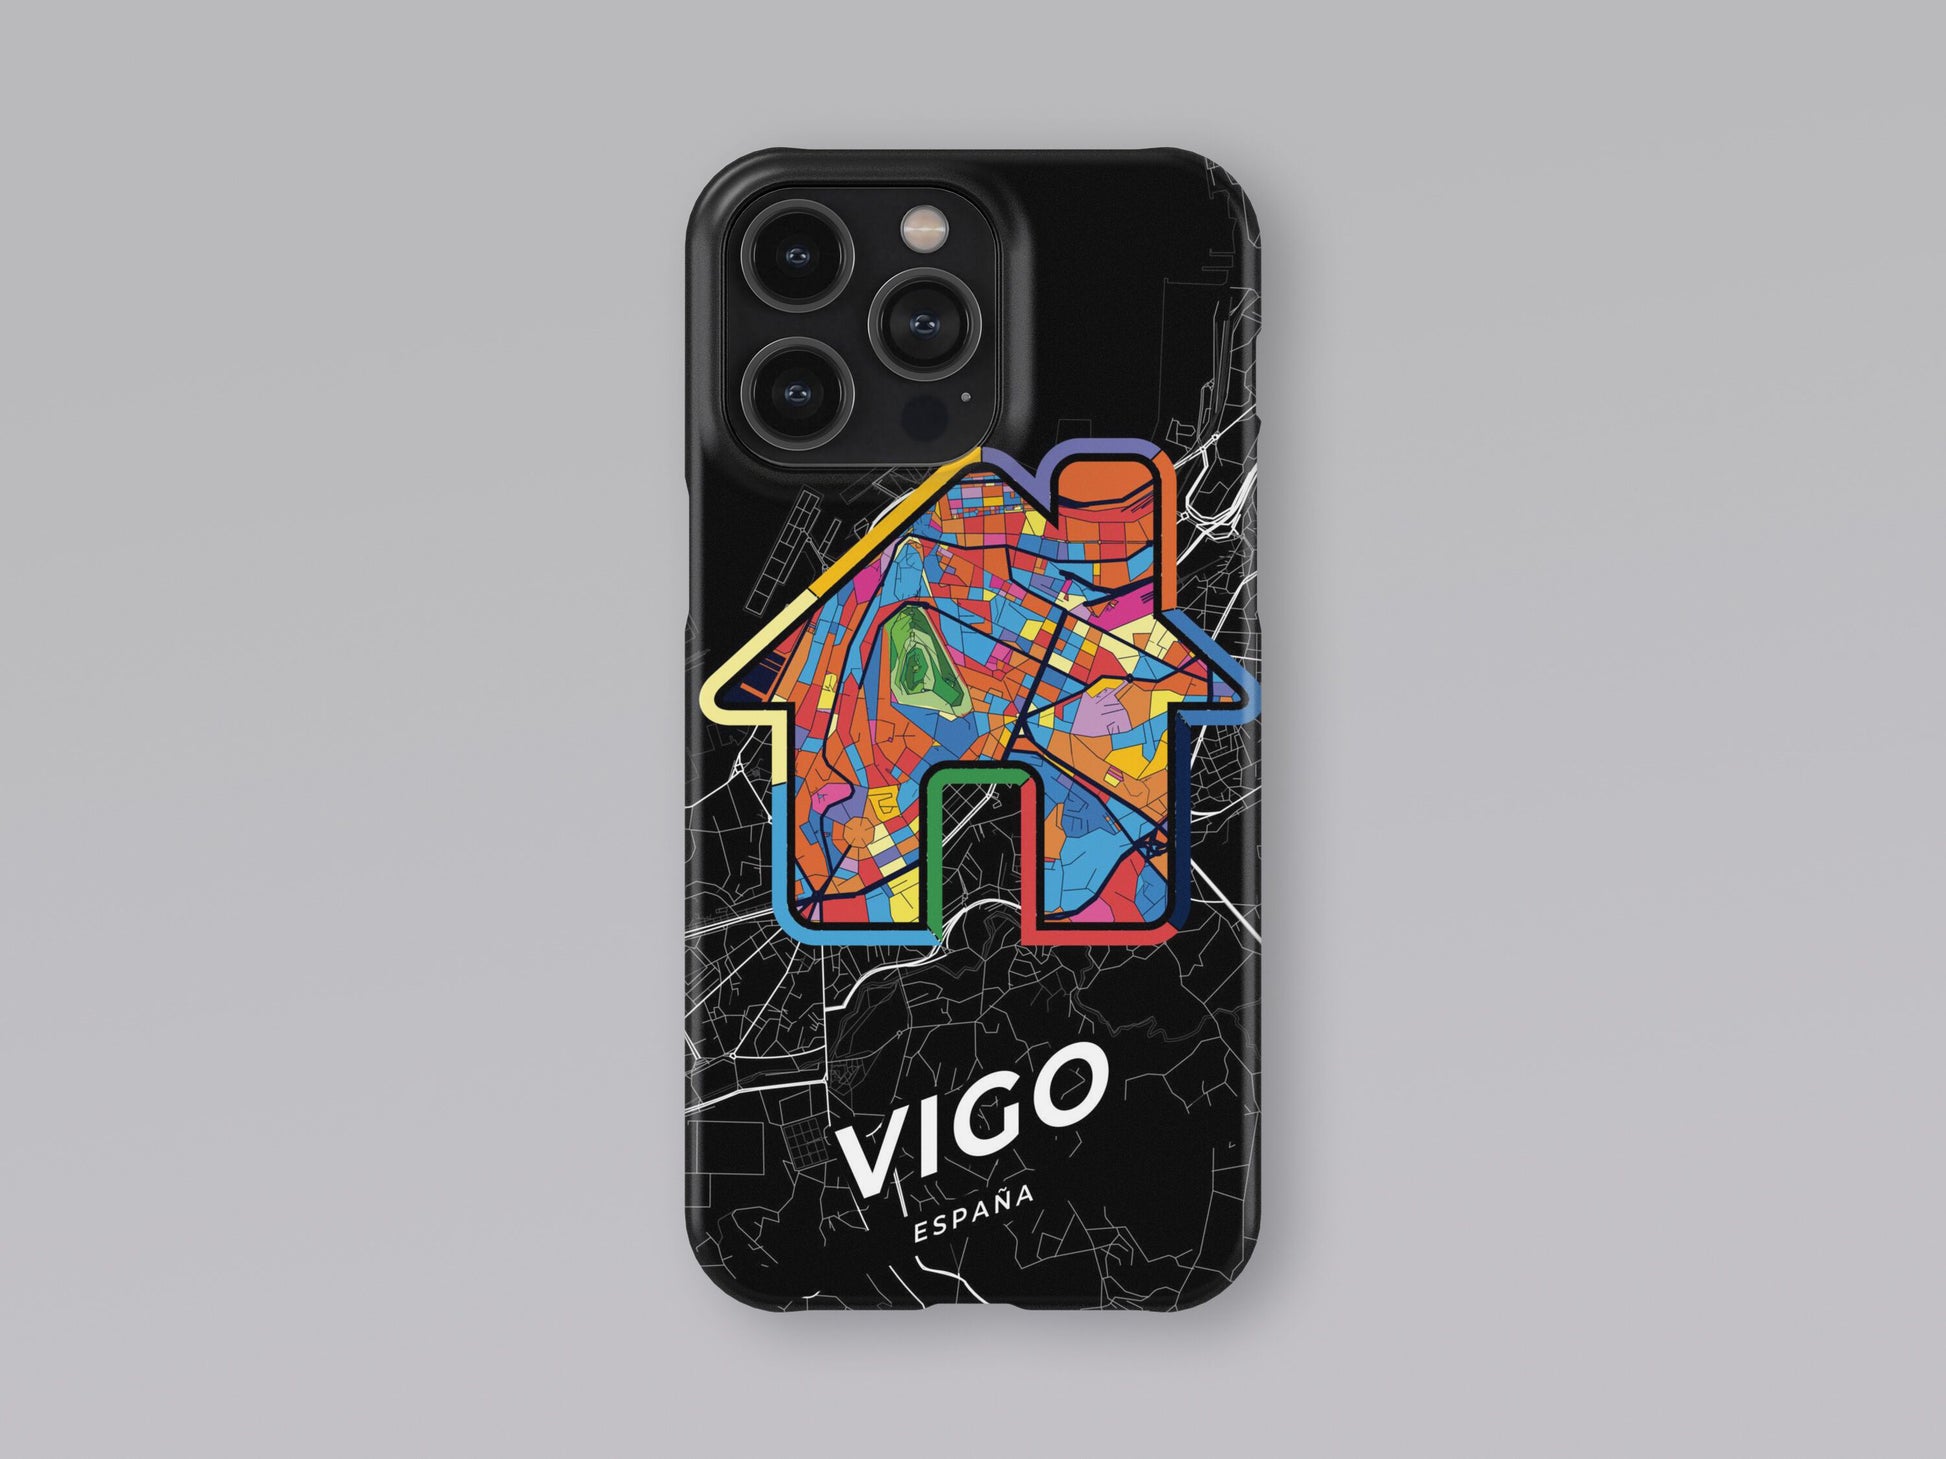 Vigo Spain slim phone case with colorful icon 3